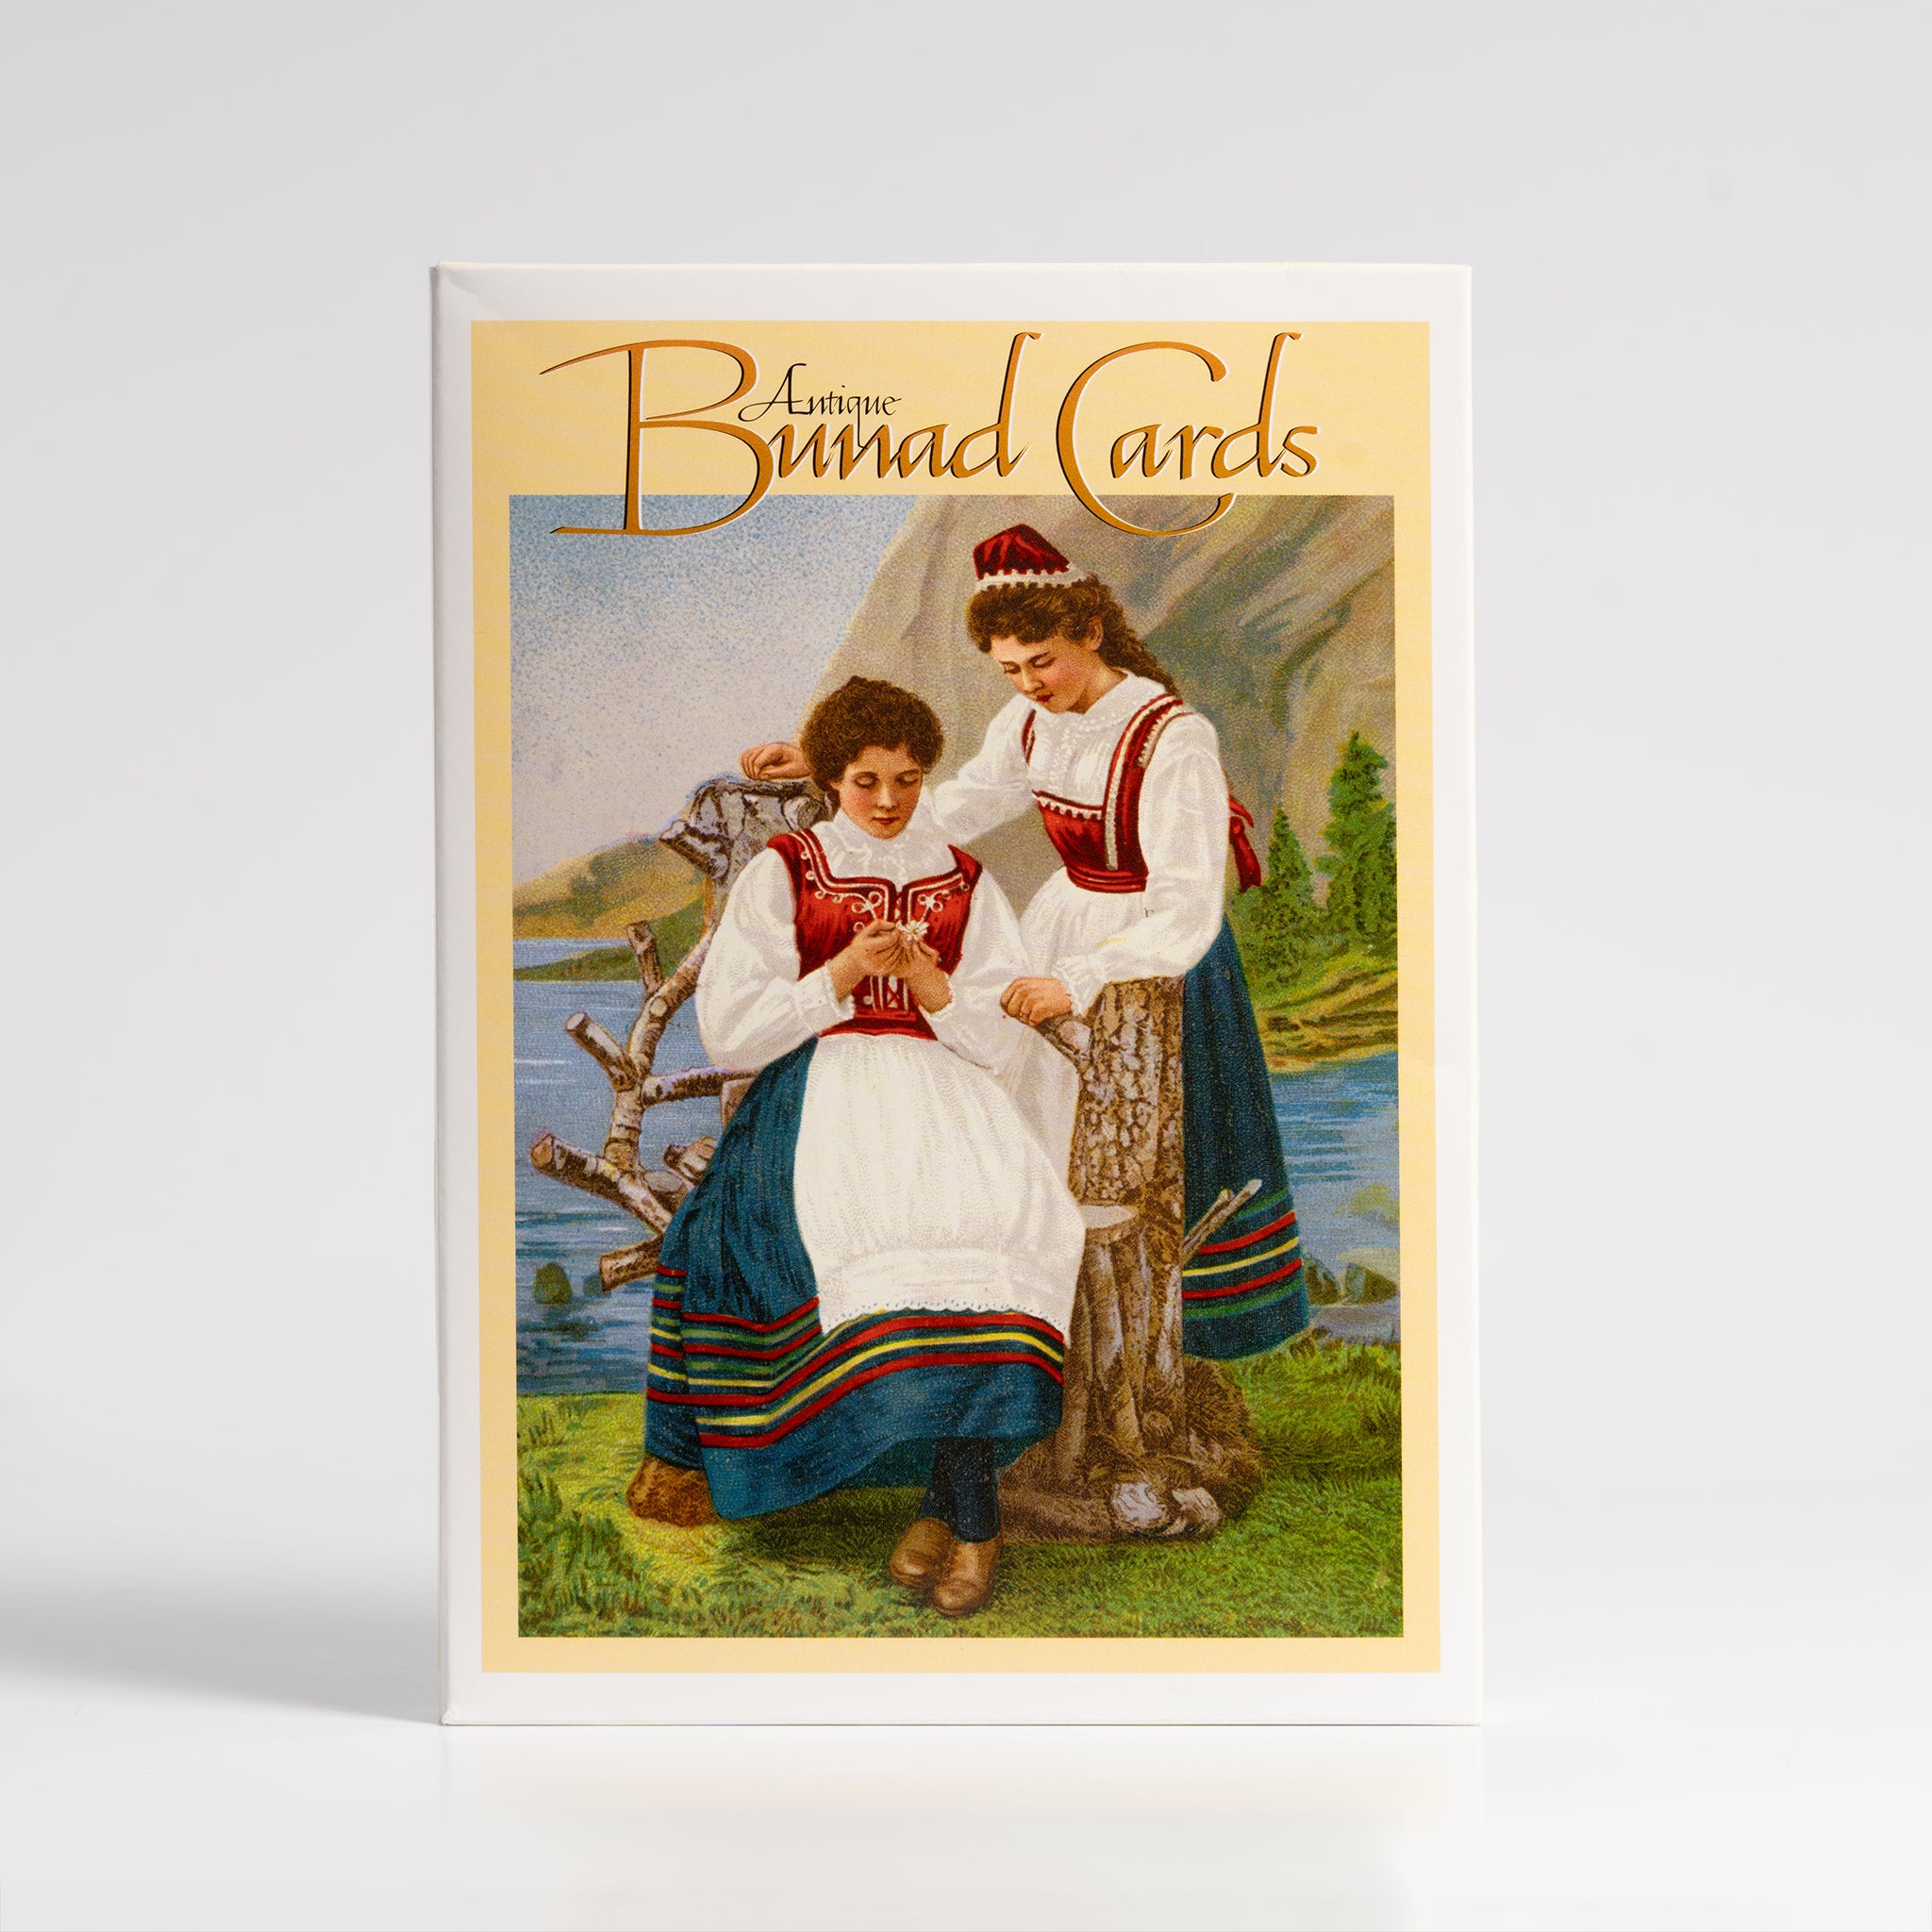 Card Set with Illustrations of Antique Bunader